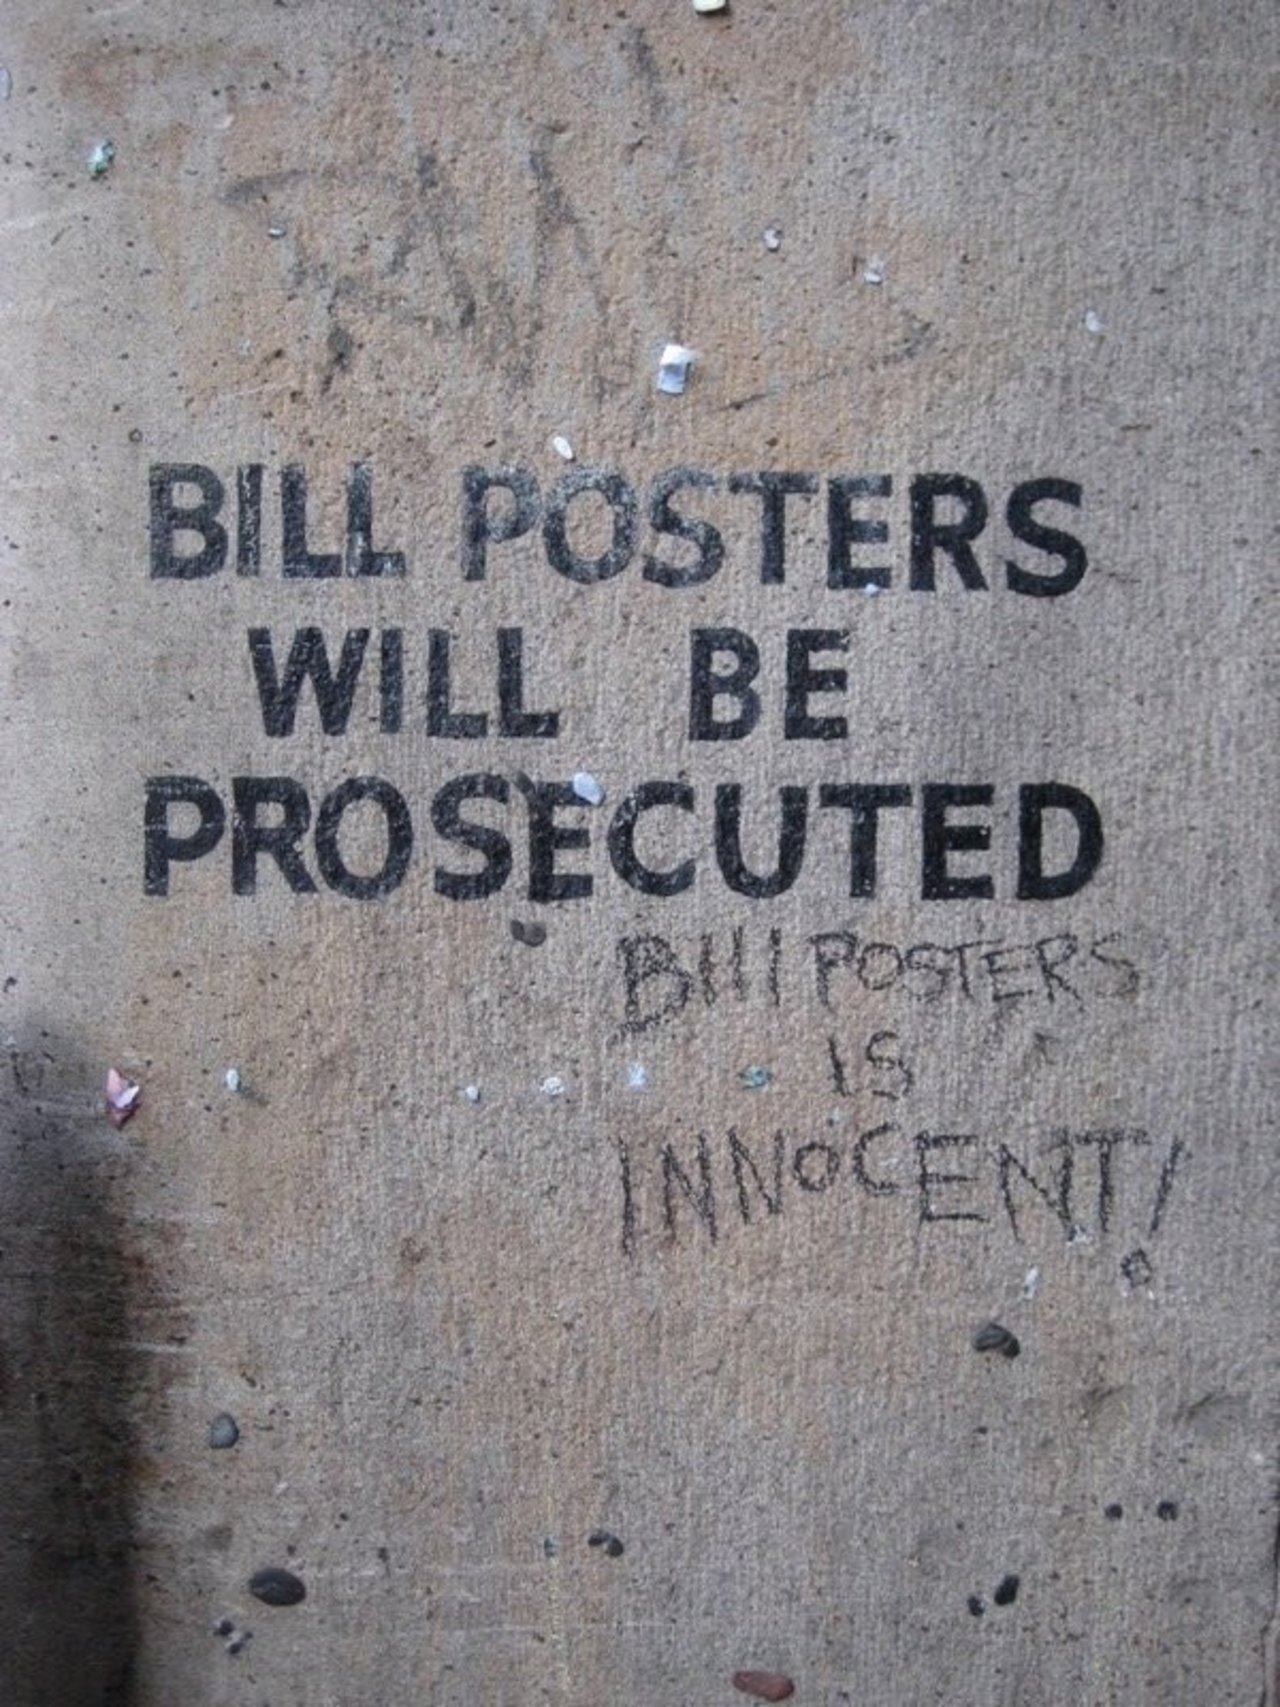 Justice for Bill #innocent #JusticeLeague #justice #streetart #Banksy https://t.co/NN9iMeTO6t